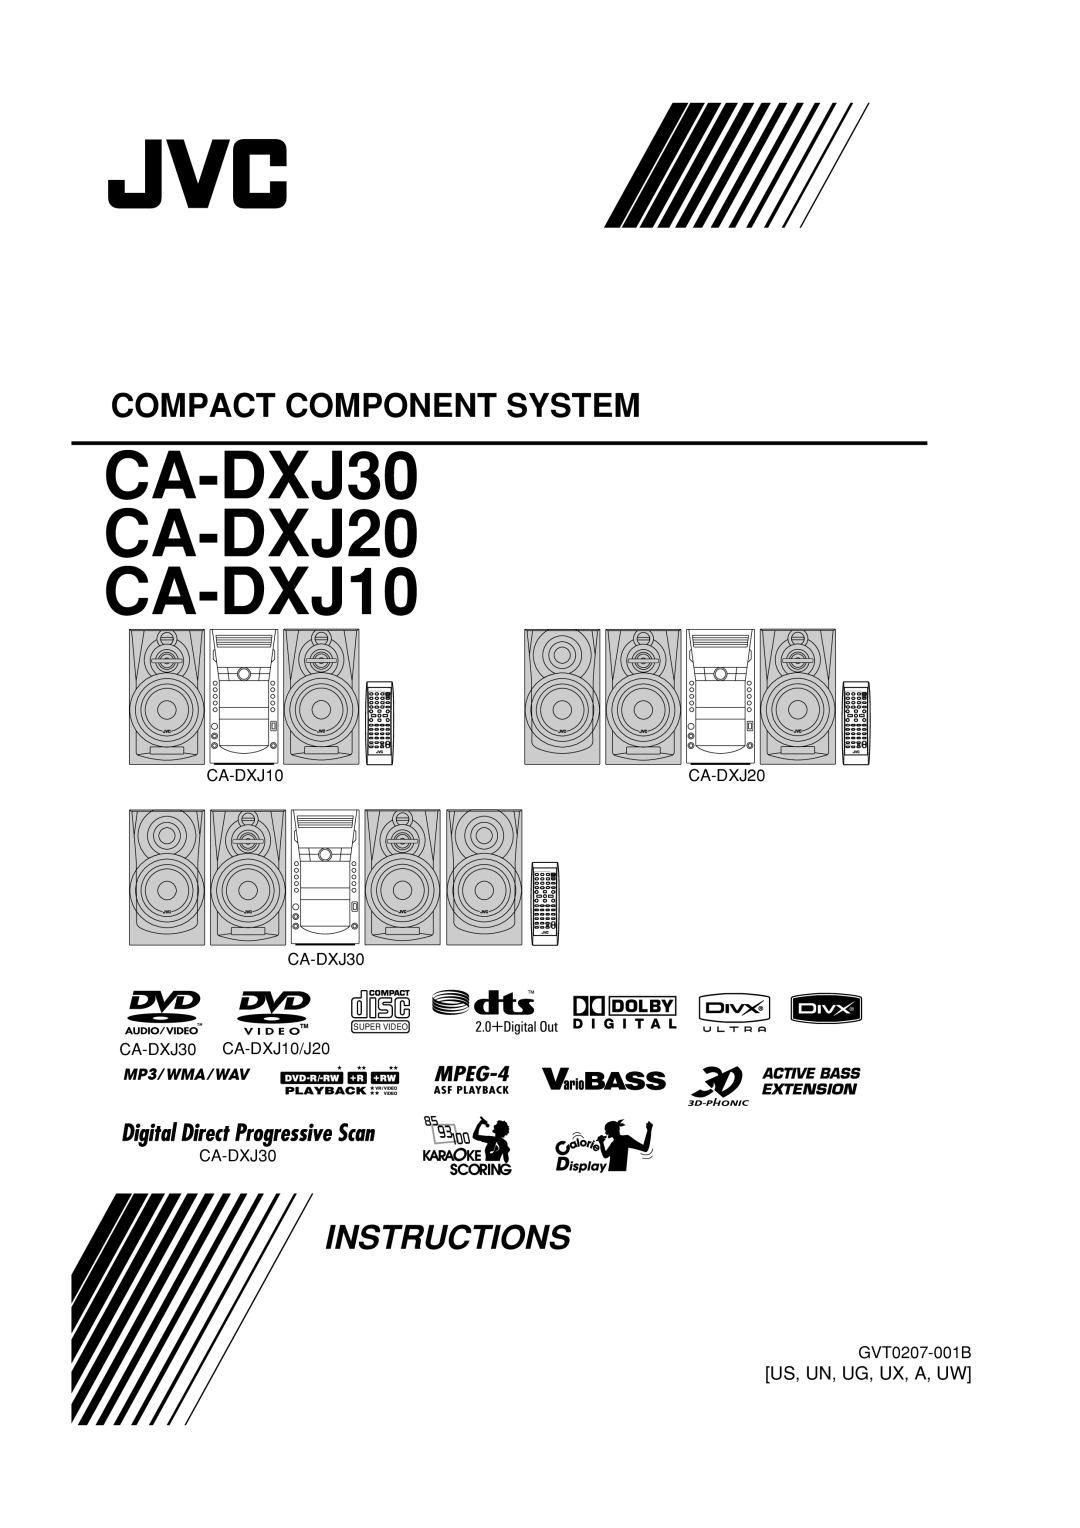 JVC CA-DXJ35 CA-DXJ30 CA-DXJ20 CA-DXJ10, Us, Un, Ug, Ux, A, Uw, CA-DXJ30 CA-DXJ10/J20 CA-DXJ30, GVT0207-001B, Instructions 